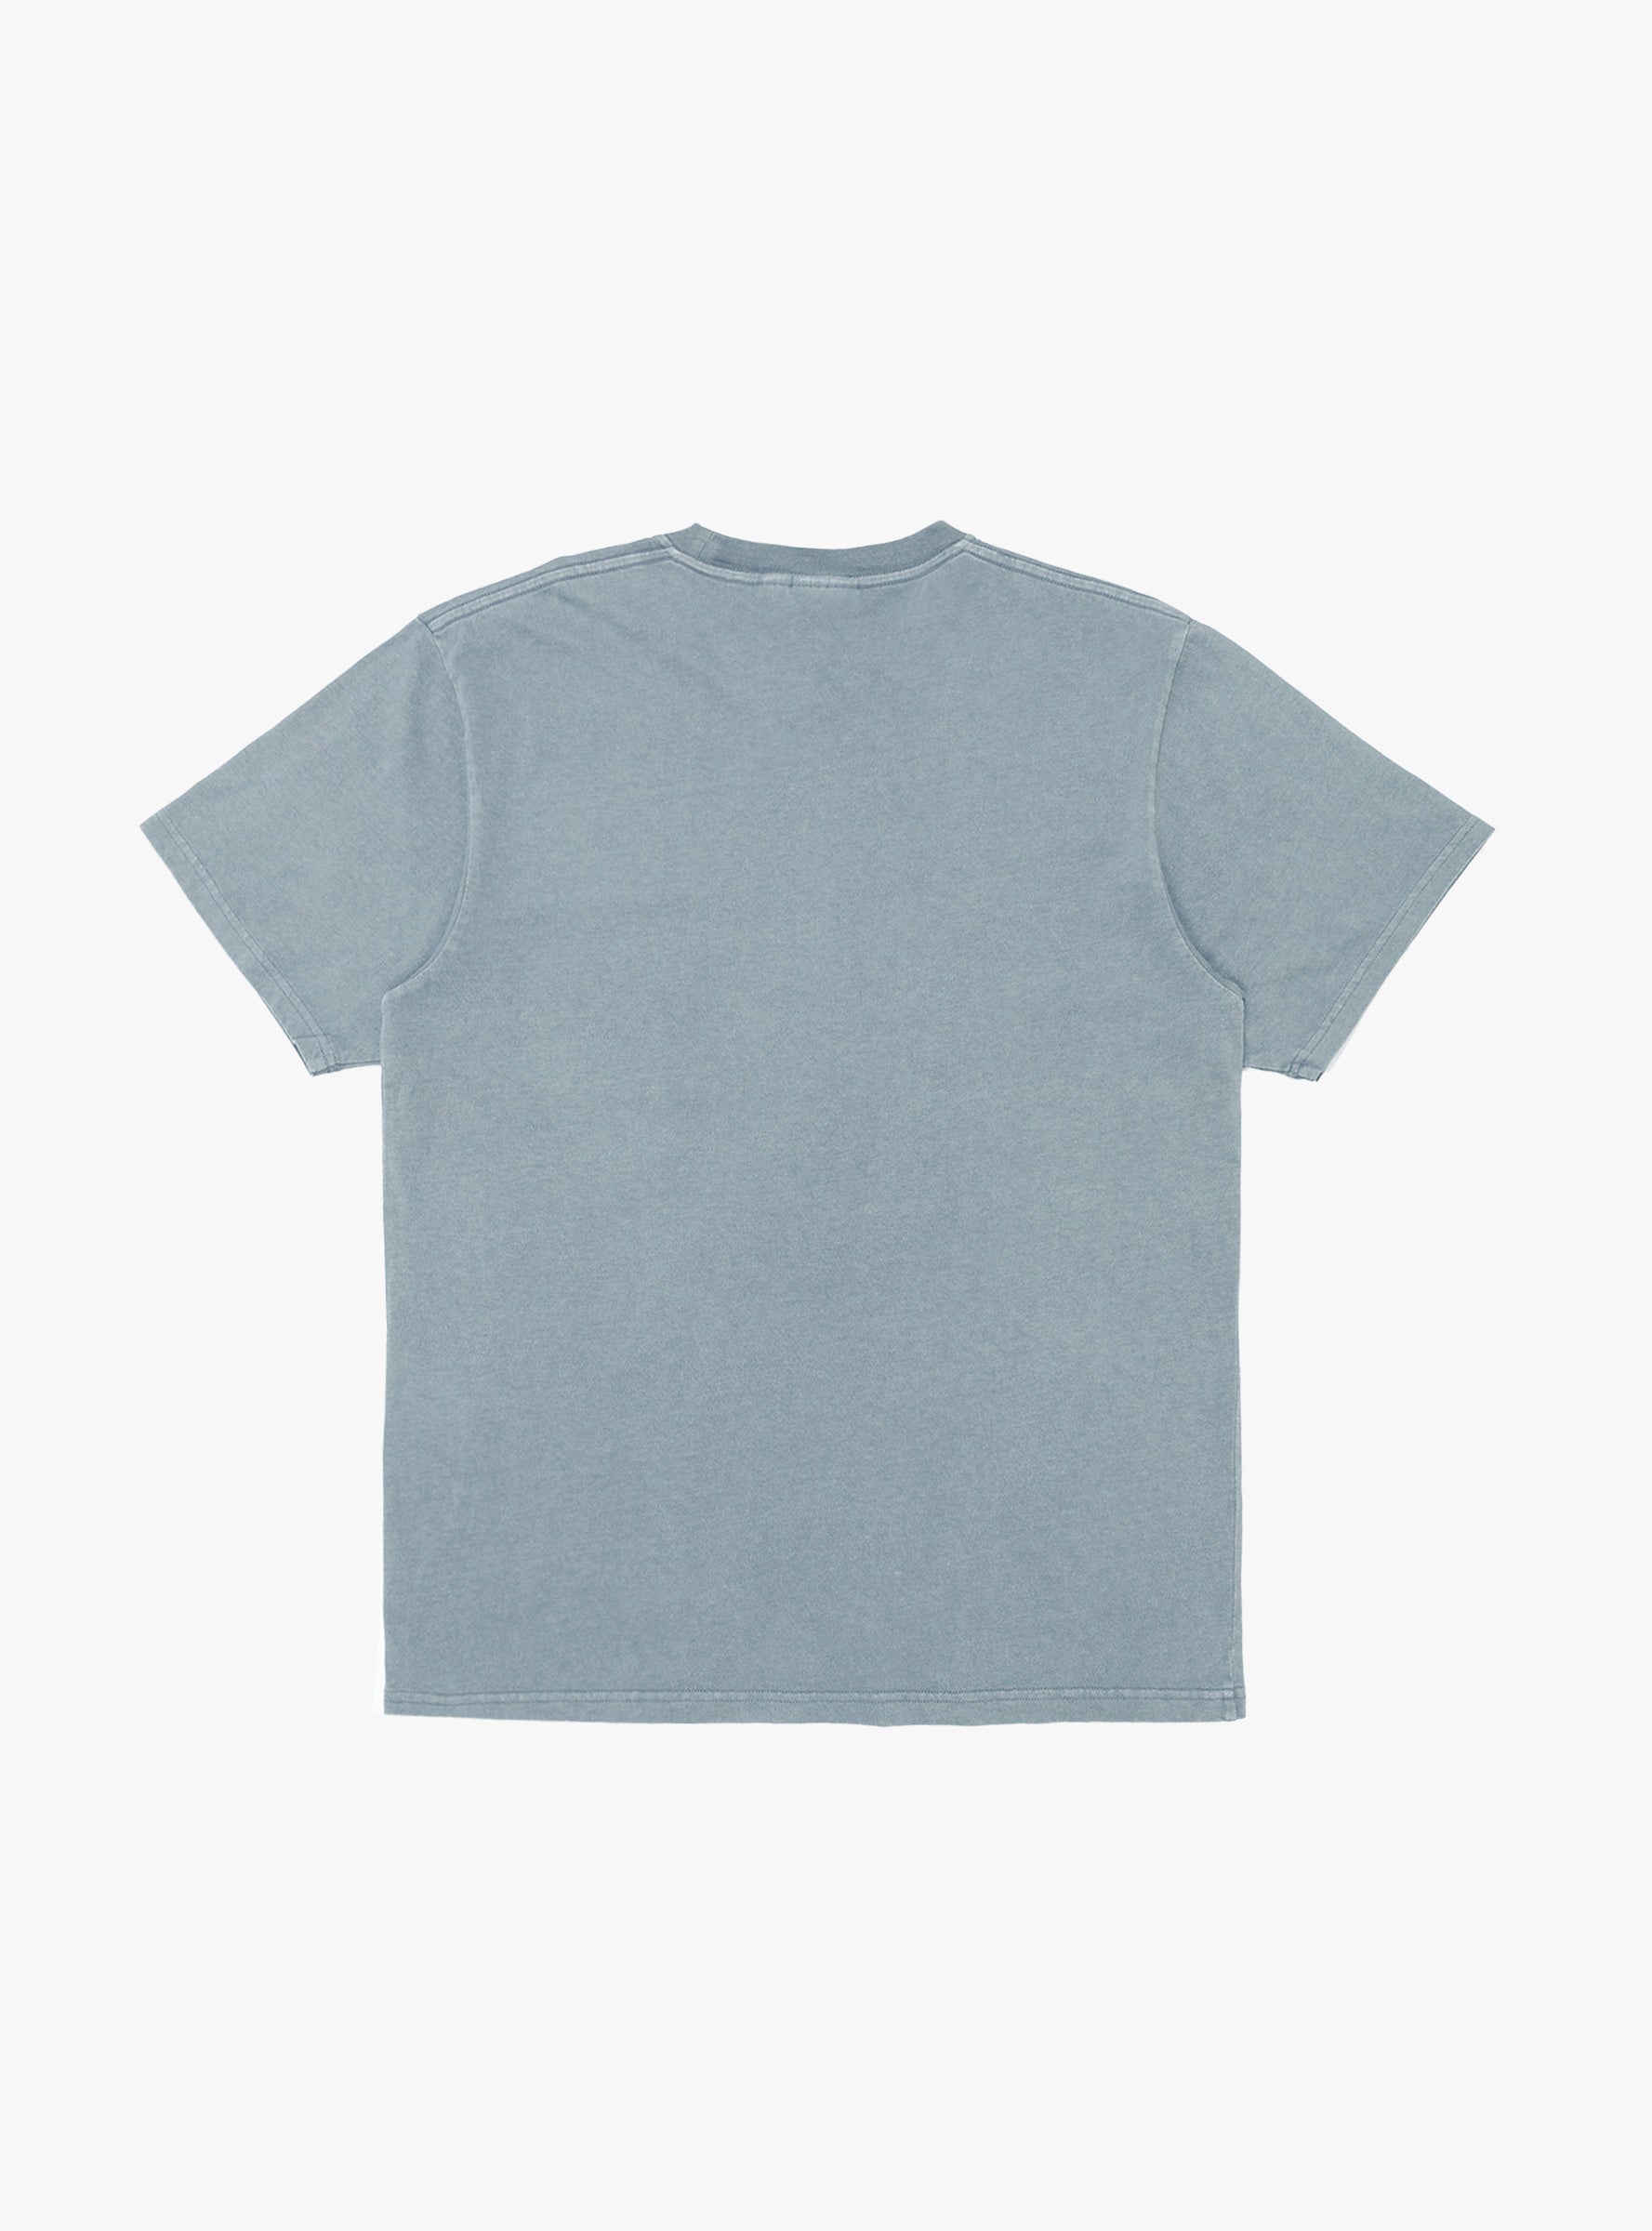 Gramicci Gramicci One Point T-shirt Slate Pigment - Size: XL